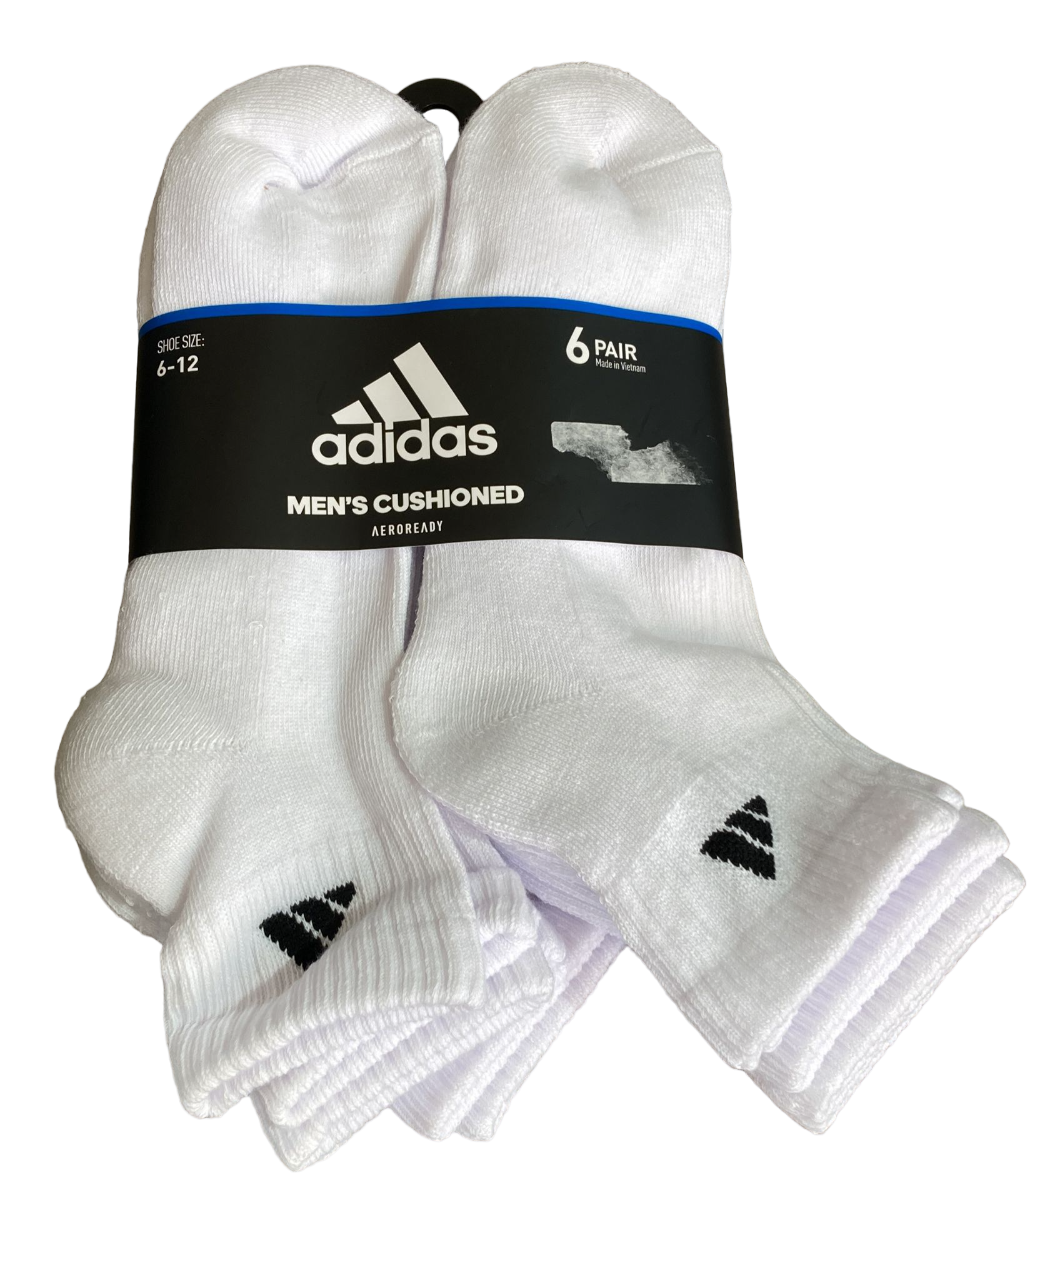 Adidas Men's Cushioned Quarter Socks 6 Pair Shoe Size 6-12 White